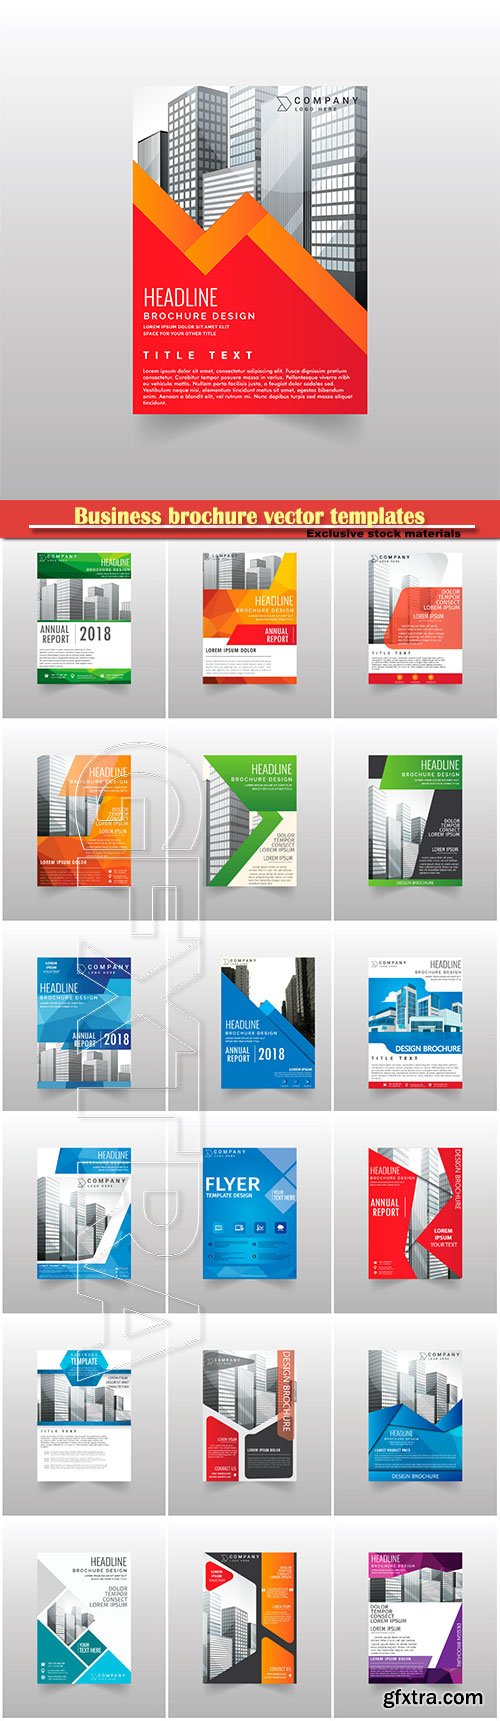 Business brochure vector templates, magazine cover, business mockup, education, presentation, report # 64